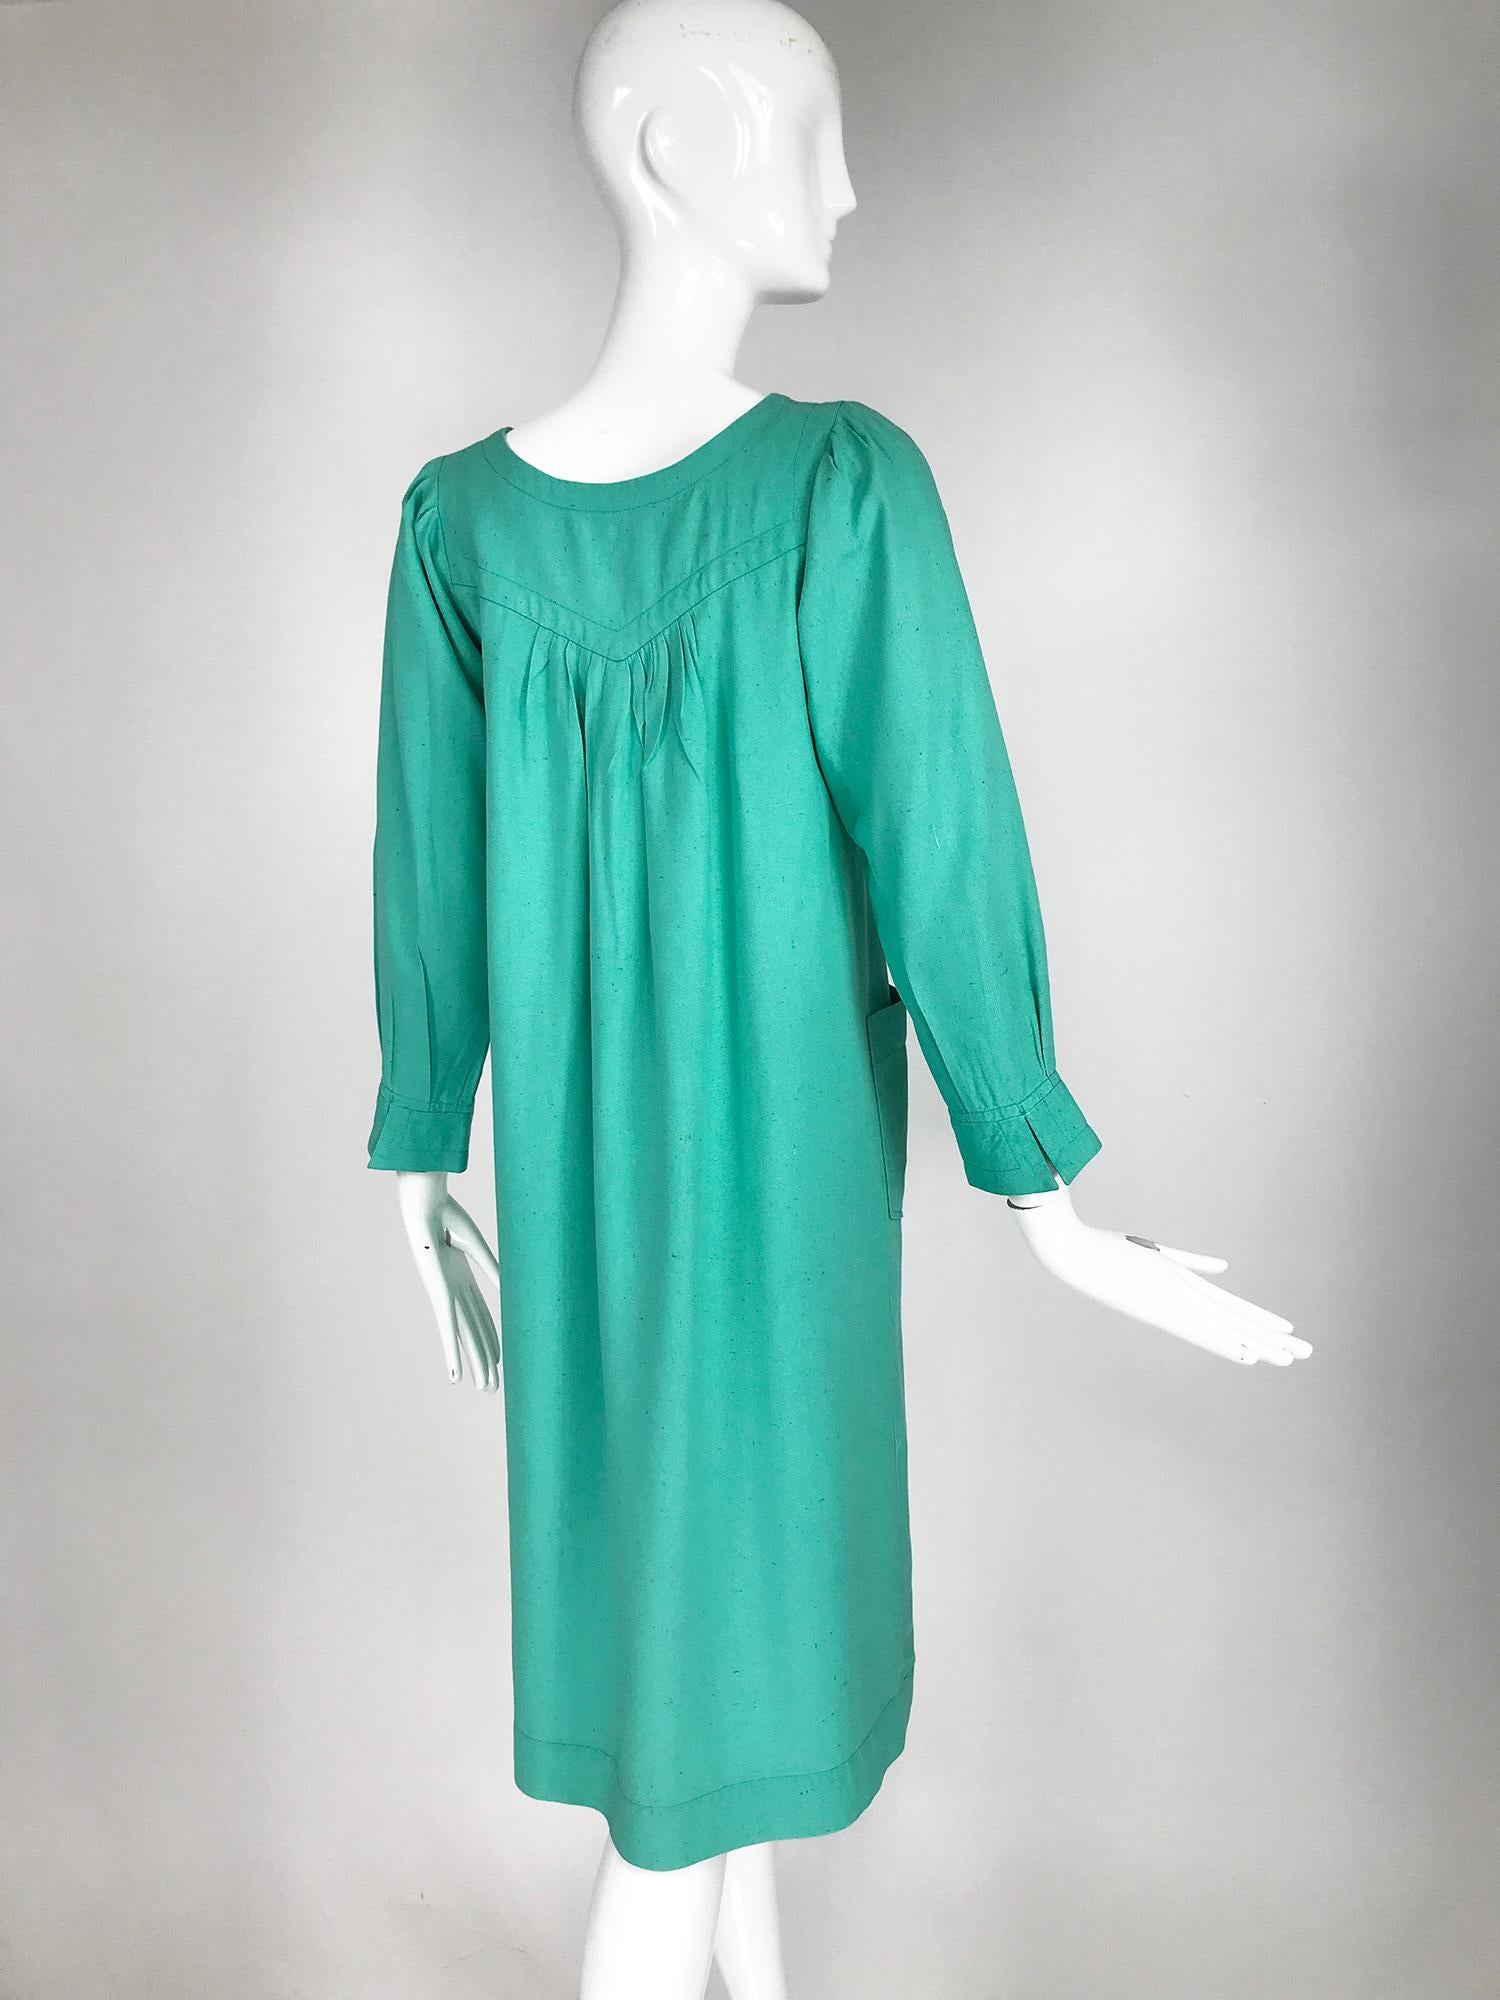 Women's Yves Saint Laurent Rive Gauche Aqua Slub Silk Smock Dress 1970s